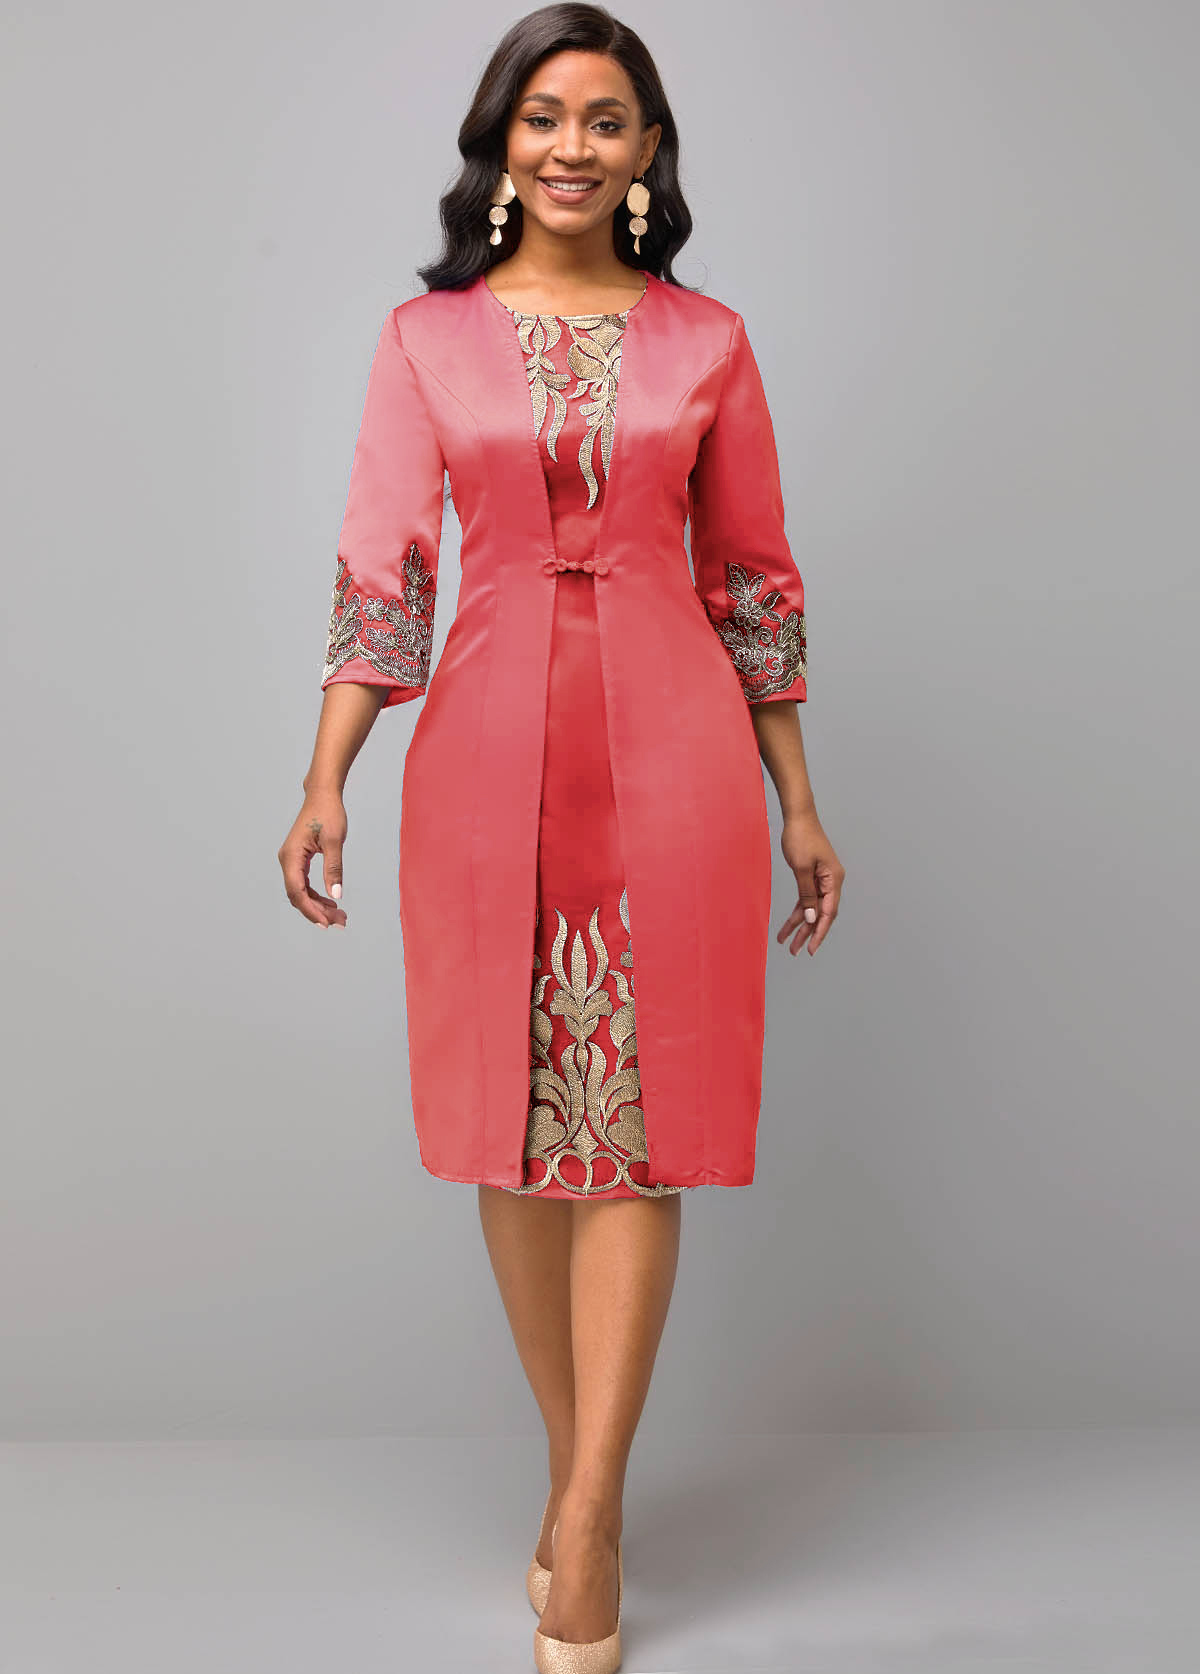 ROTITA Lace Patchwork Round Neck Pink 3/4 Sleeve Dress